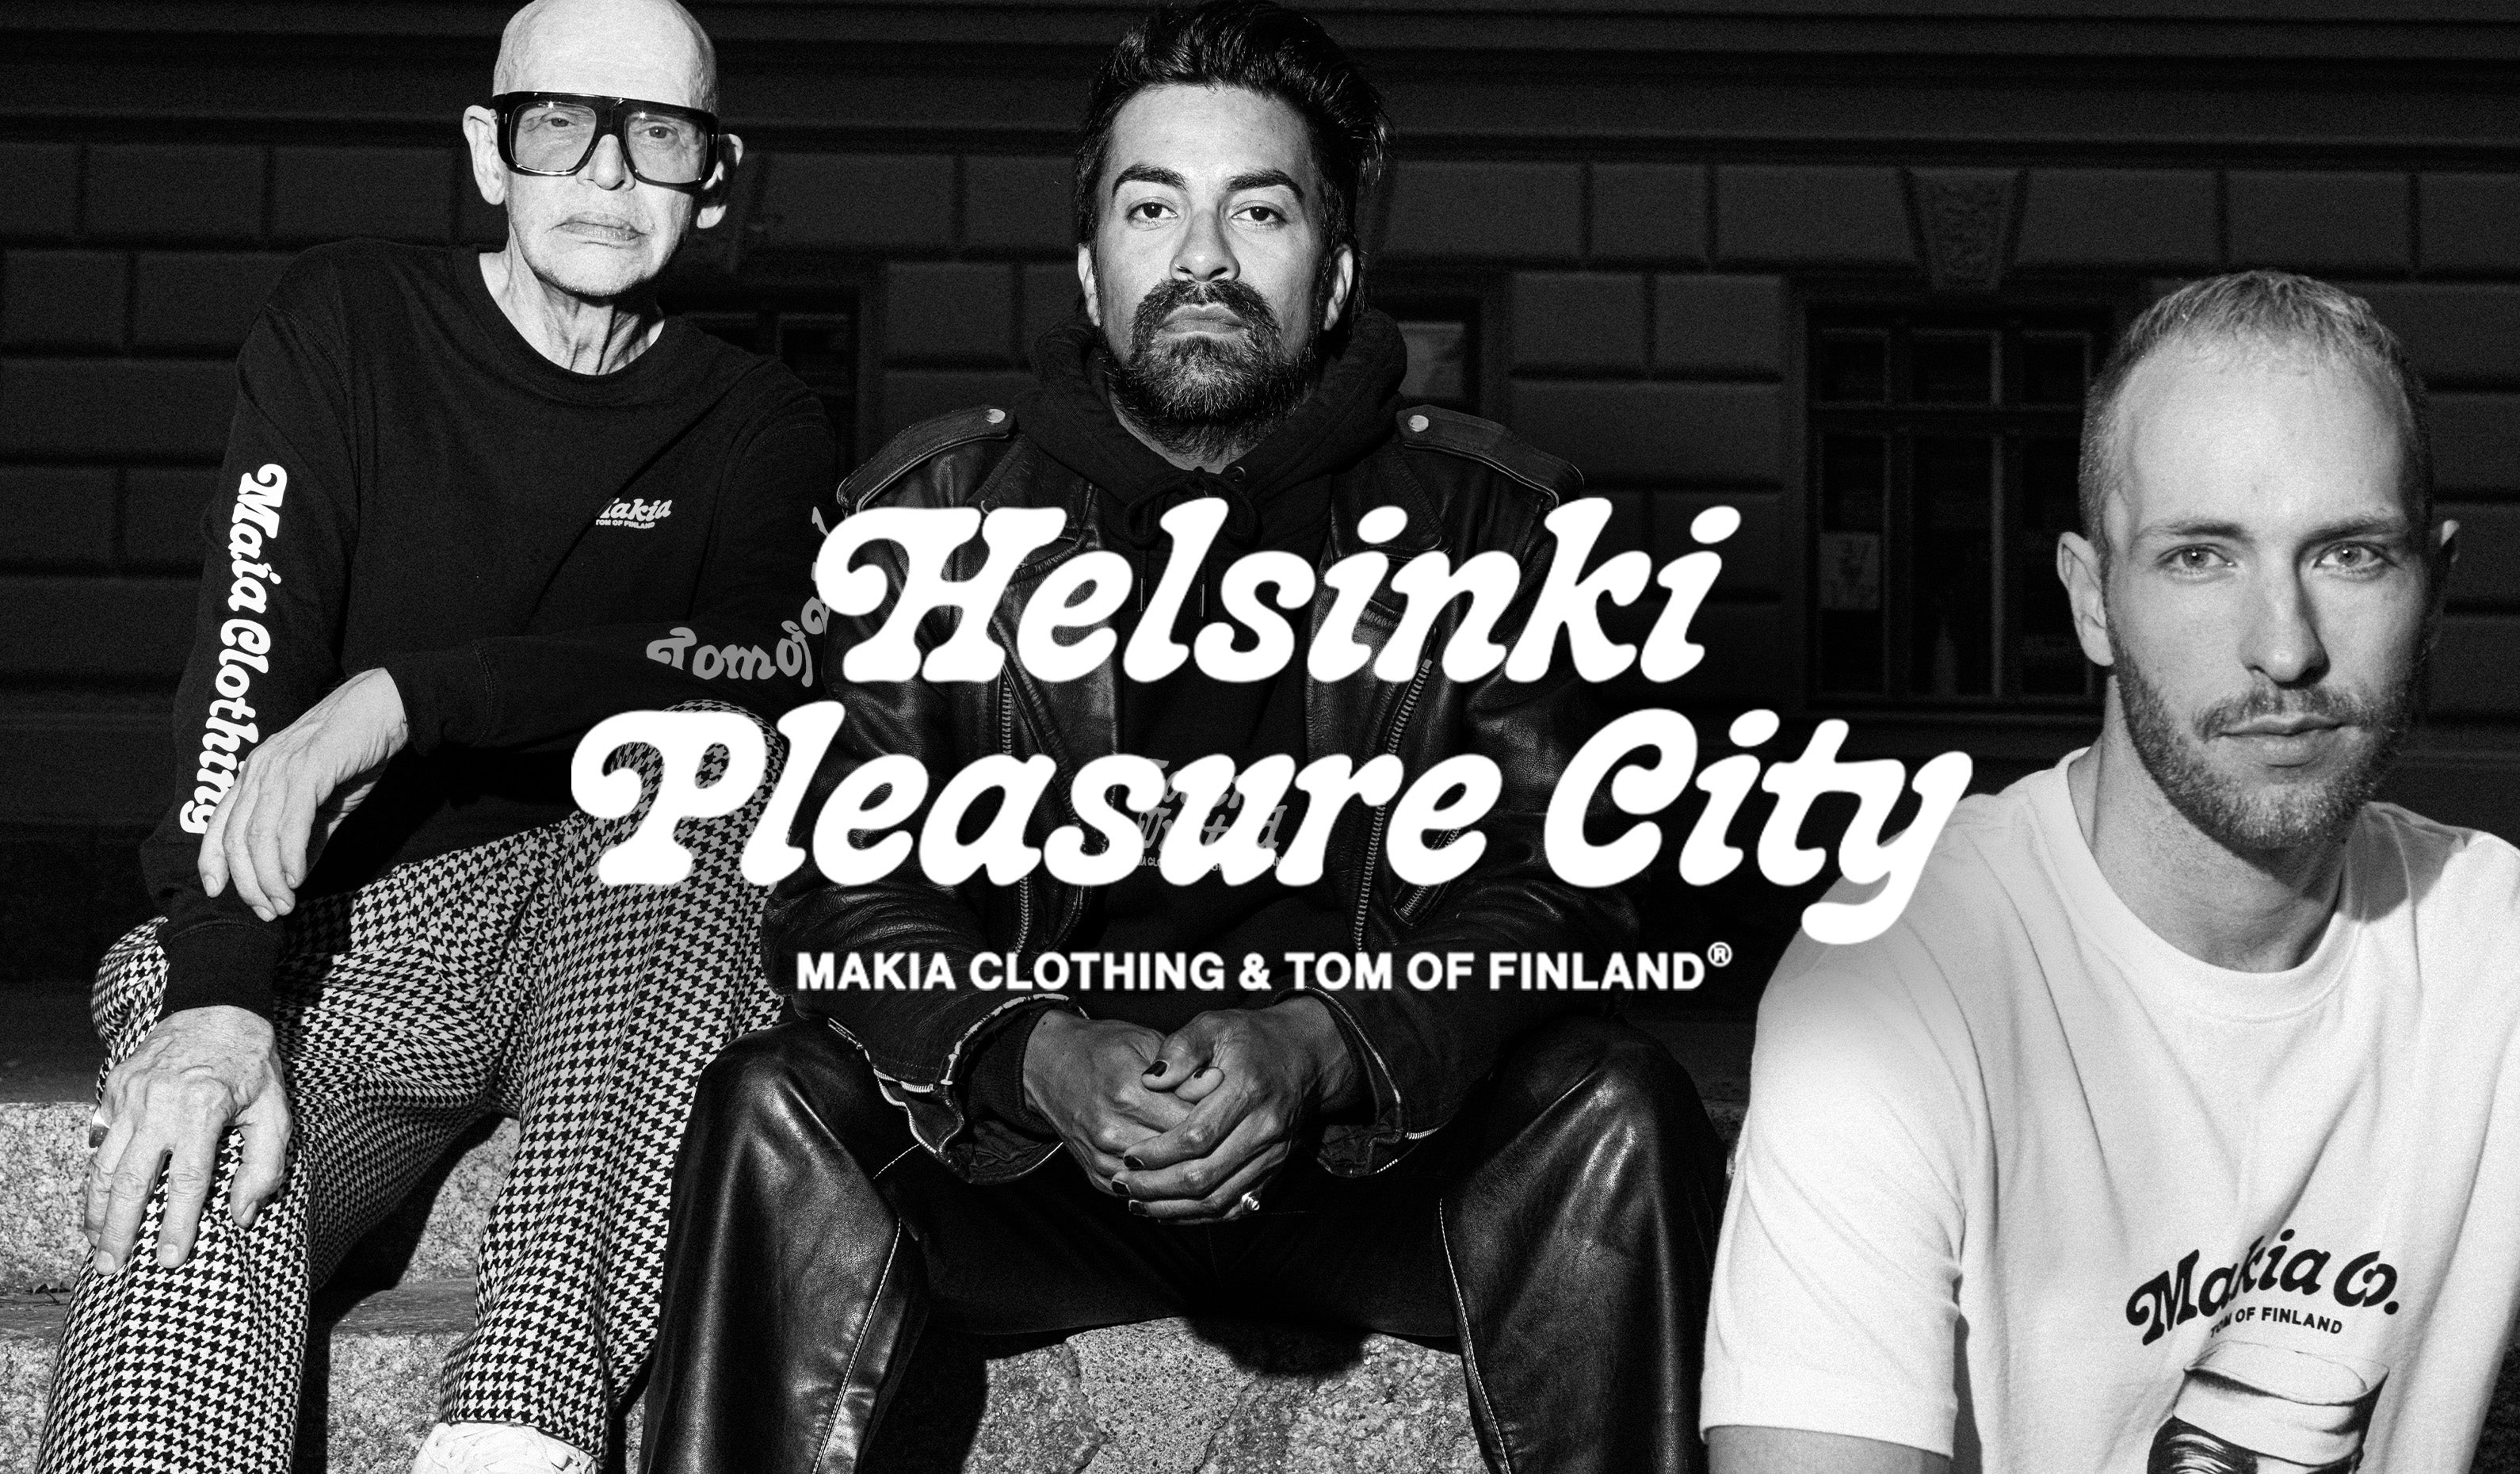 Tom of Finland - Helsinki Pleasure City